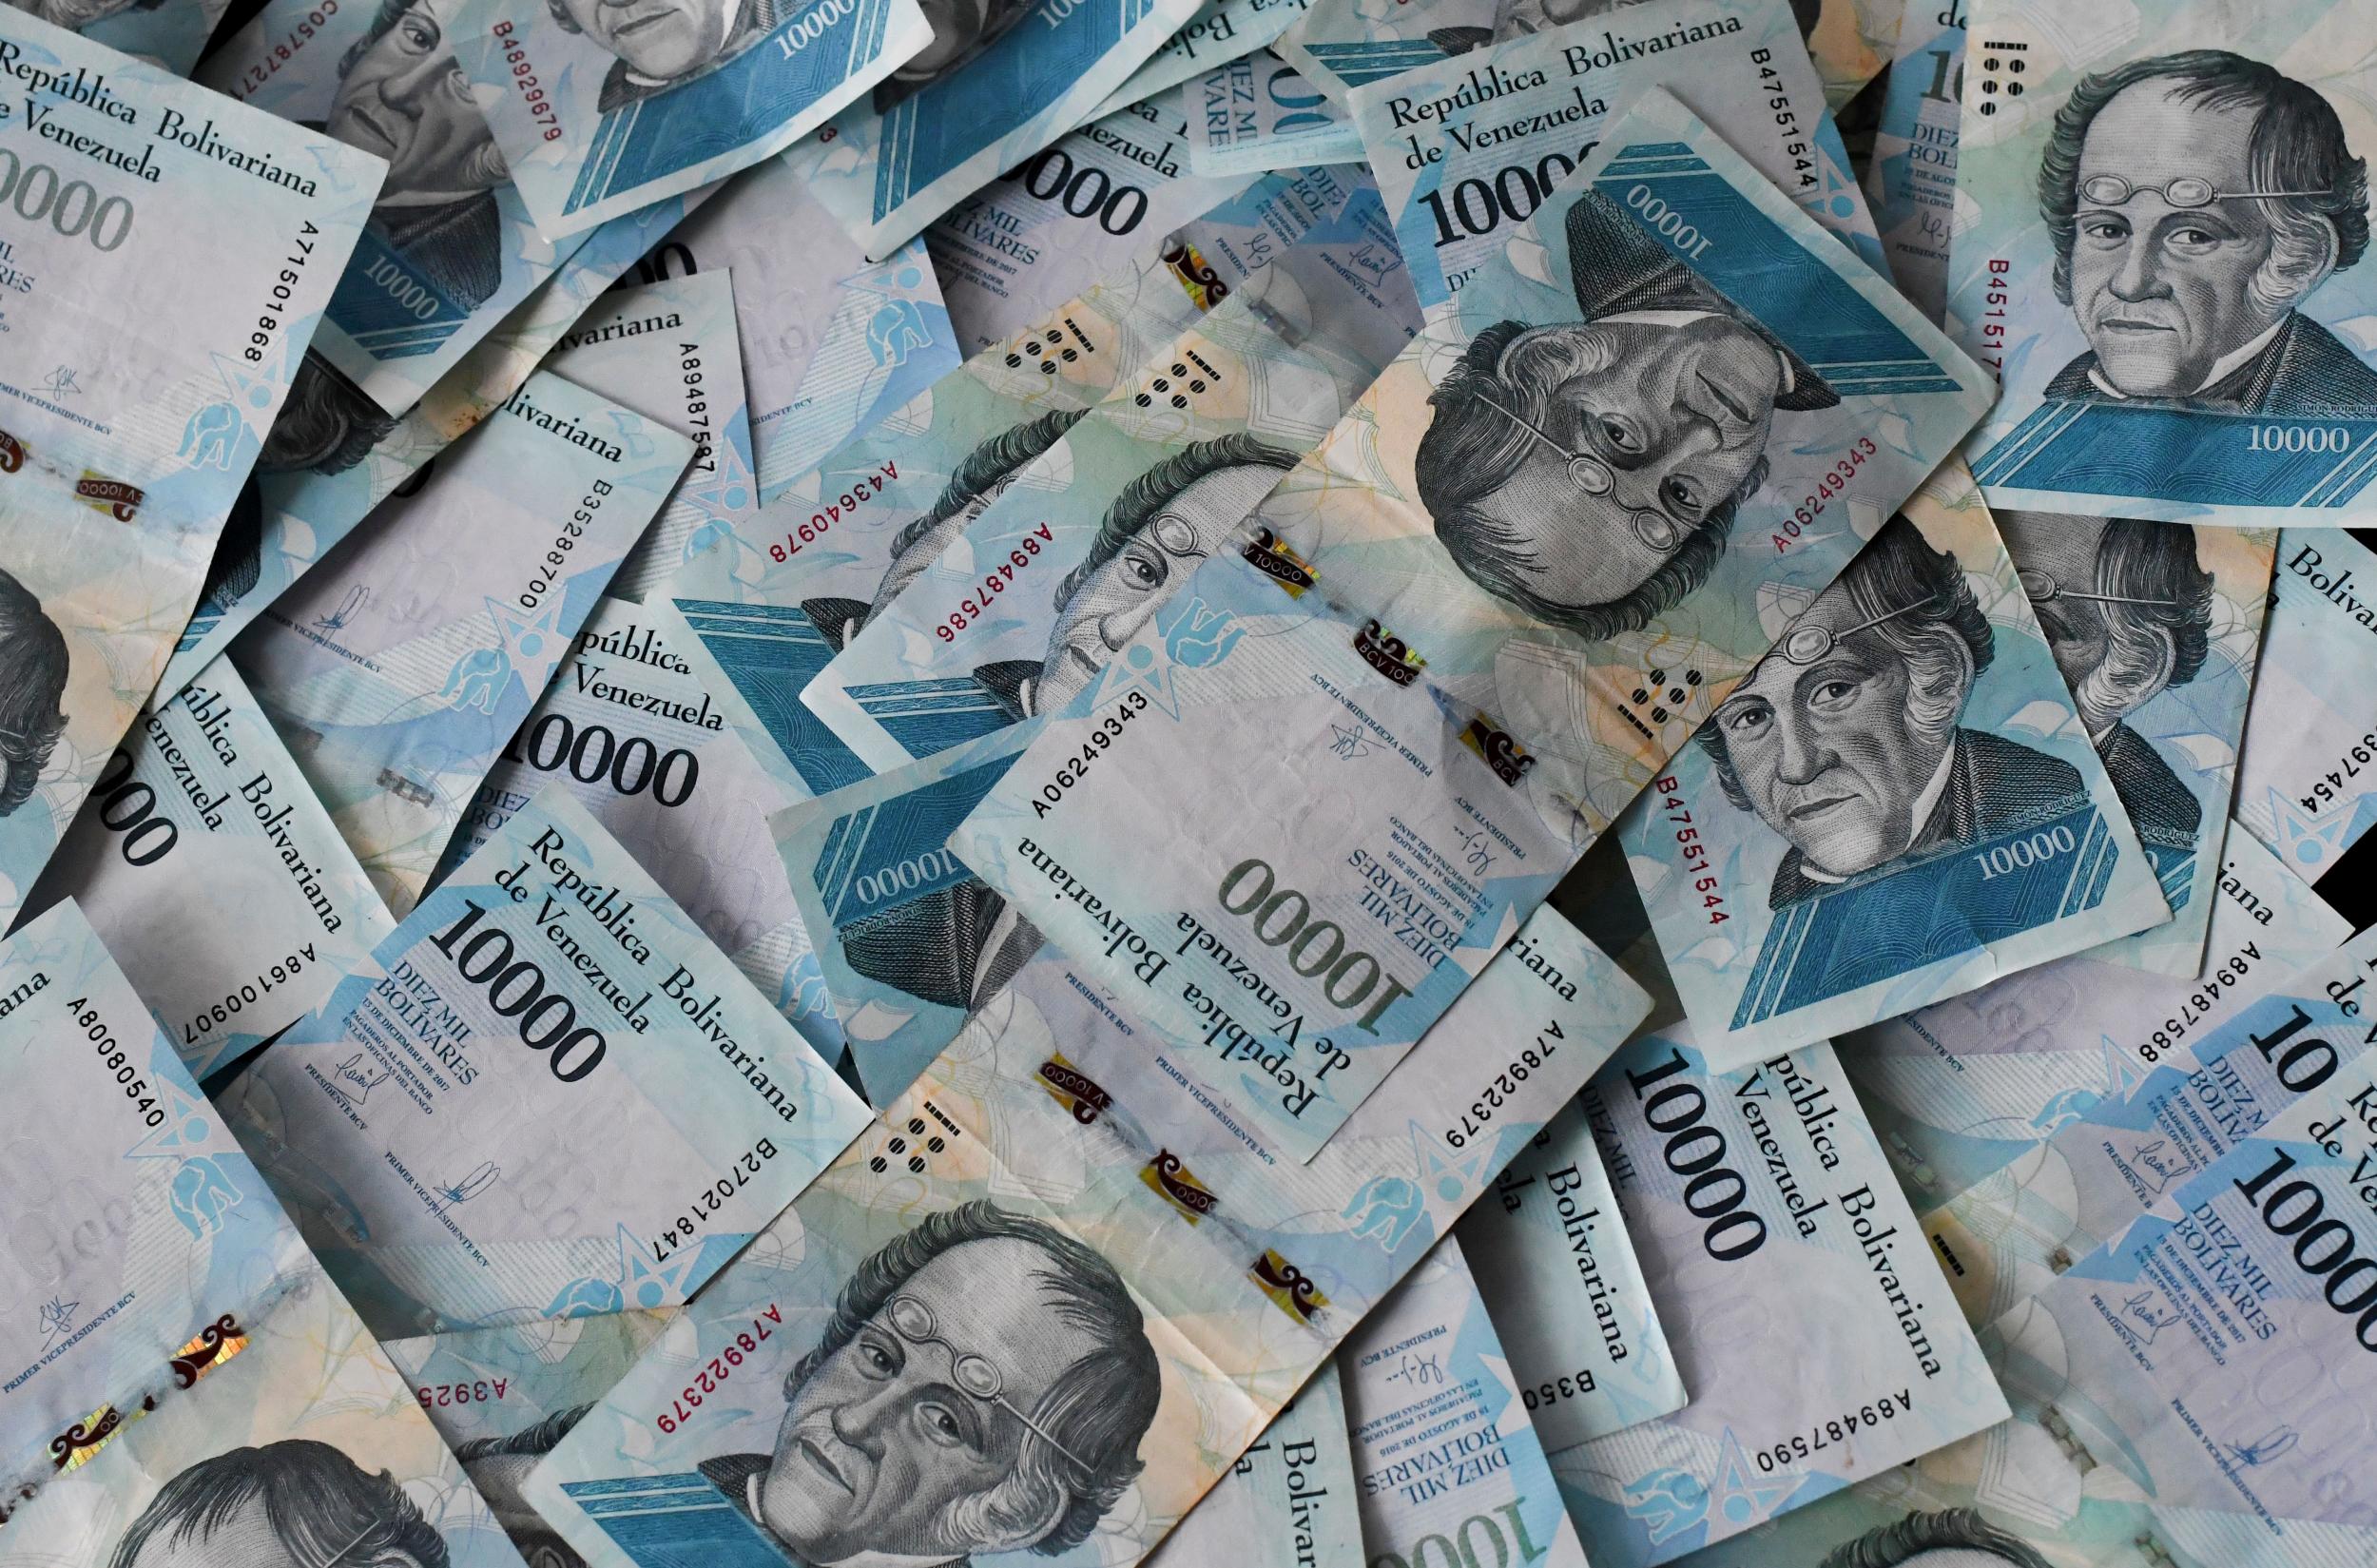 Picture of 10,000 bolivar-bills taken in Caracas on July 26, 2018